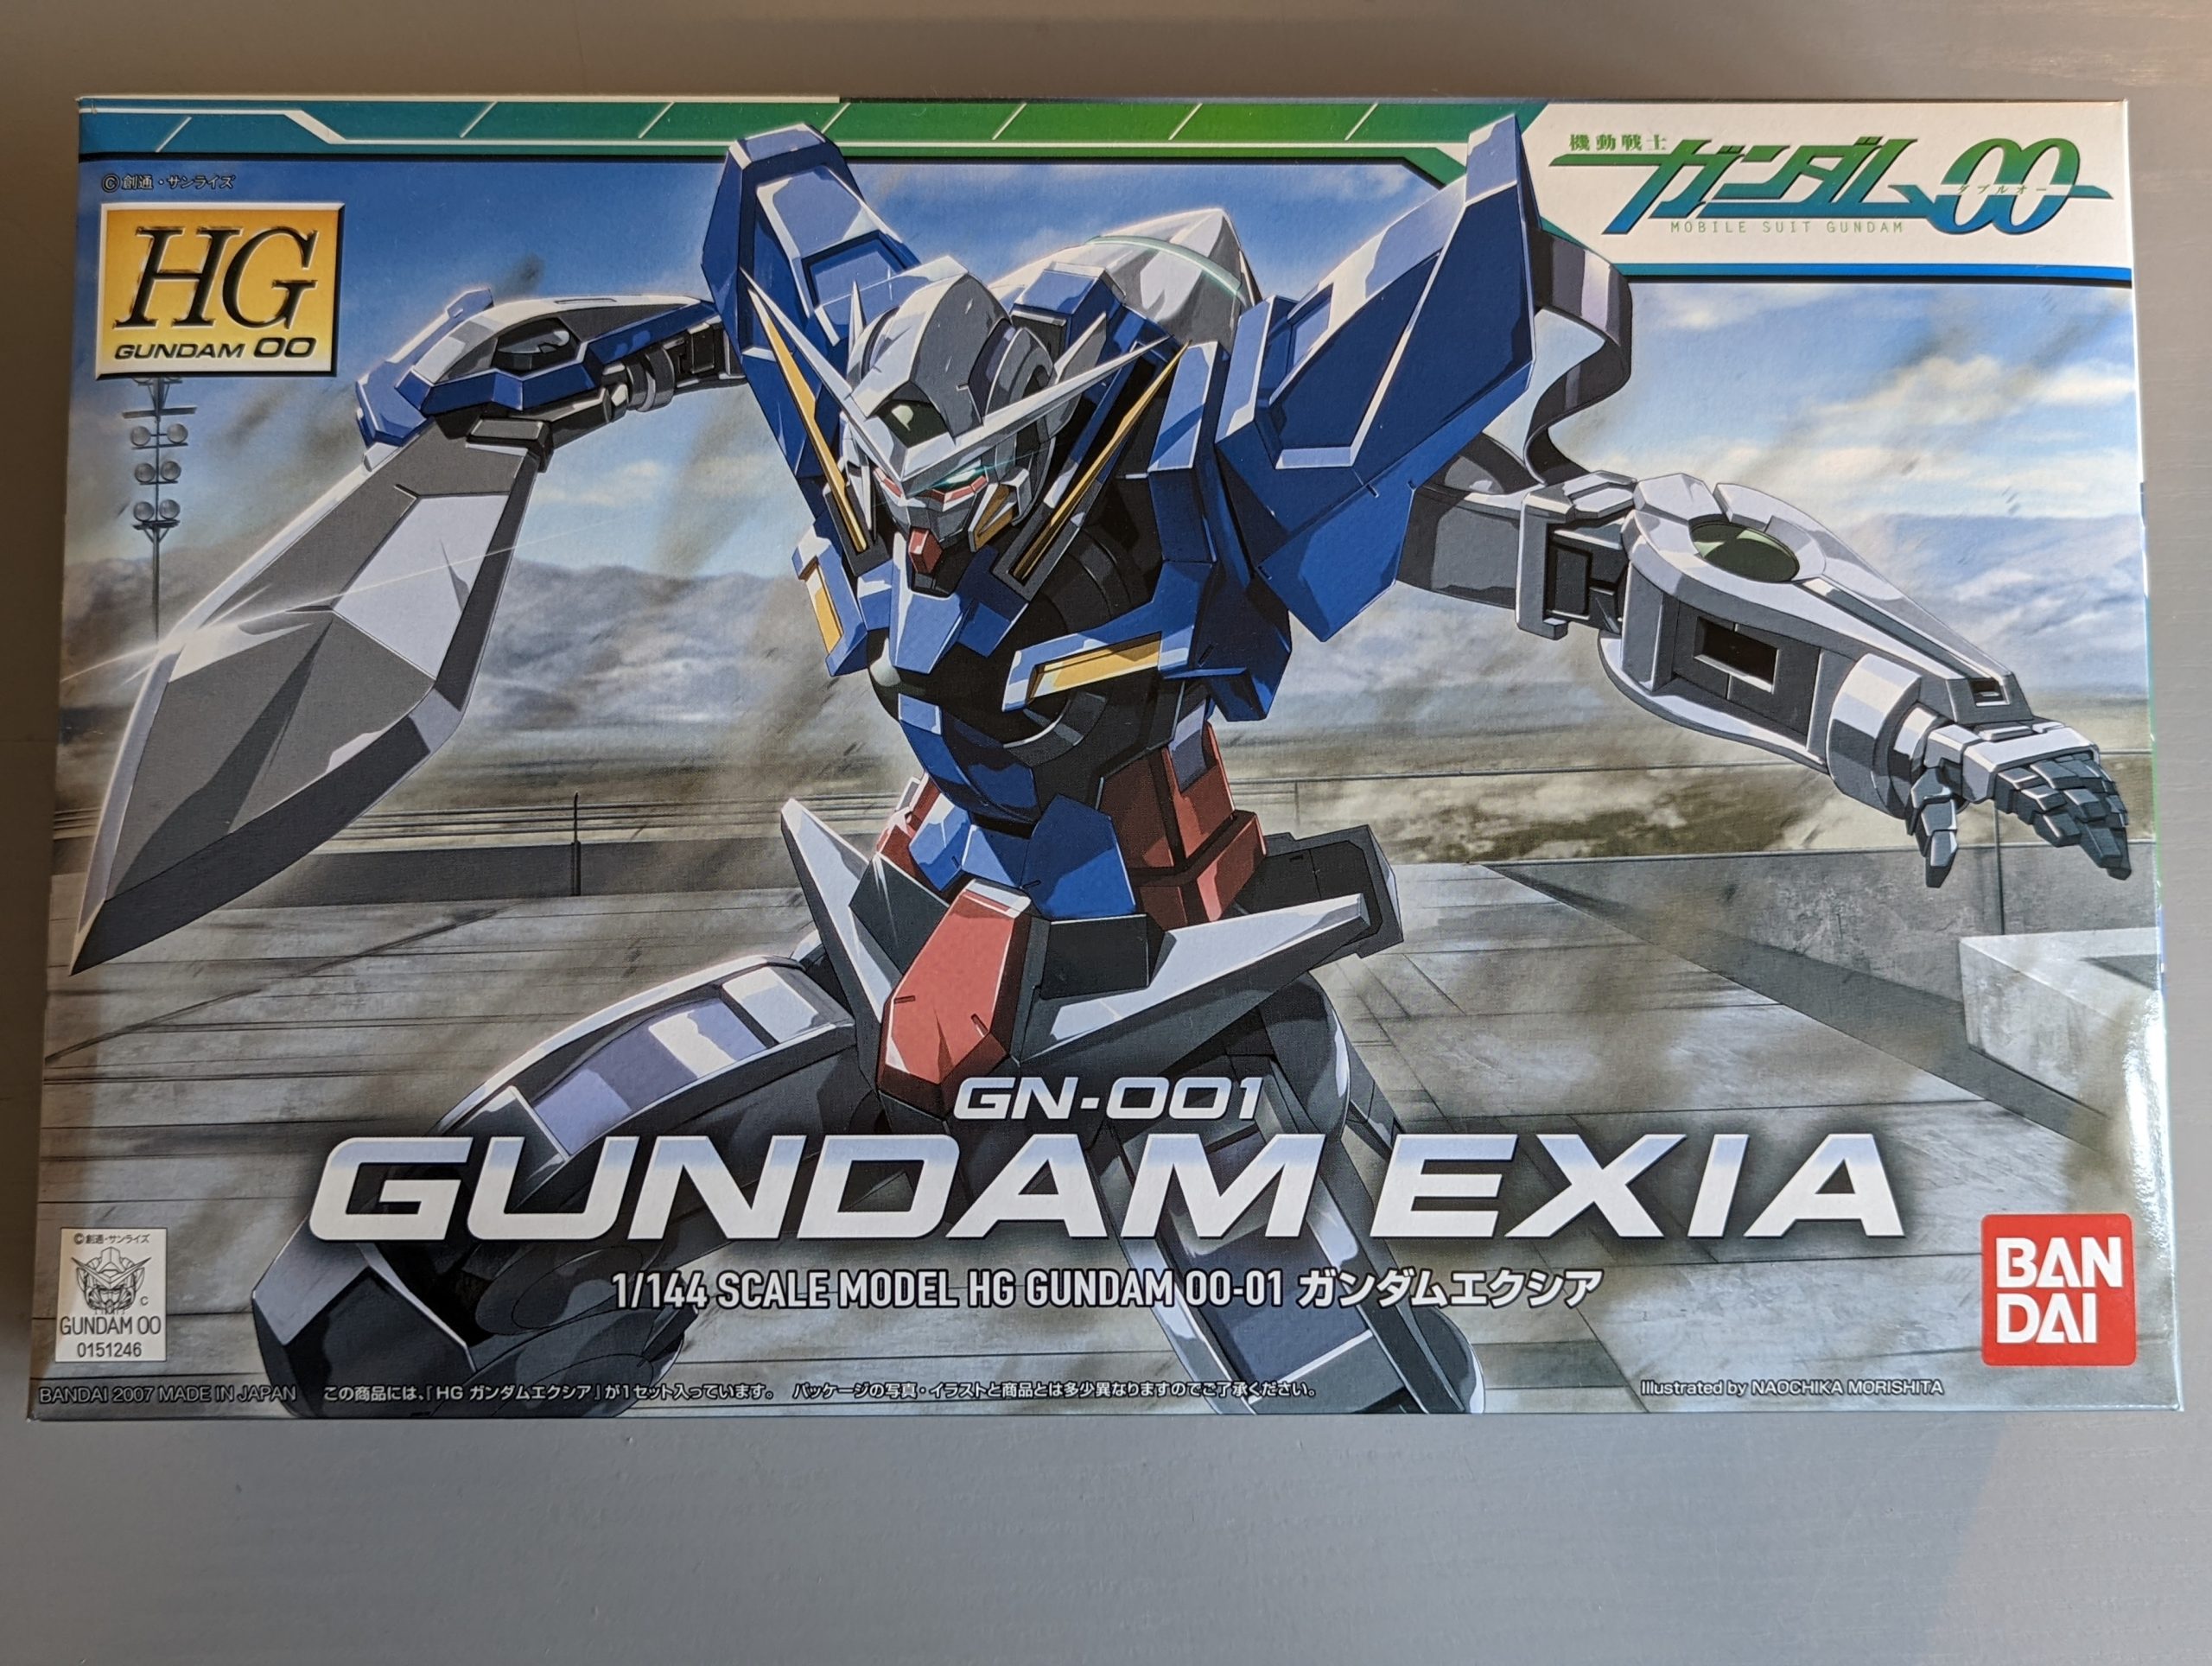 UNBOXING: GUNDAM GN-001 Exia Bandai Gunpla